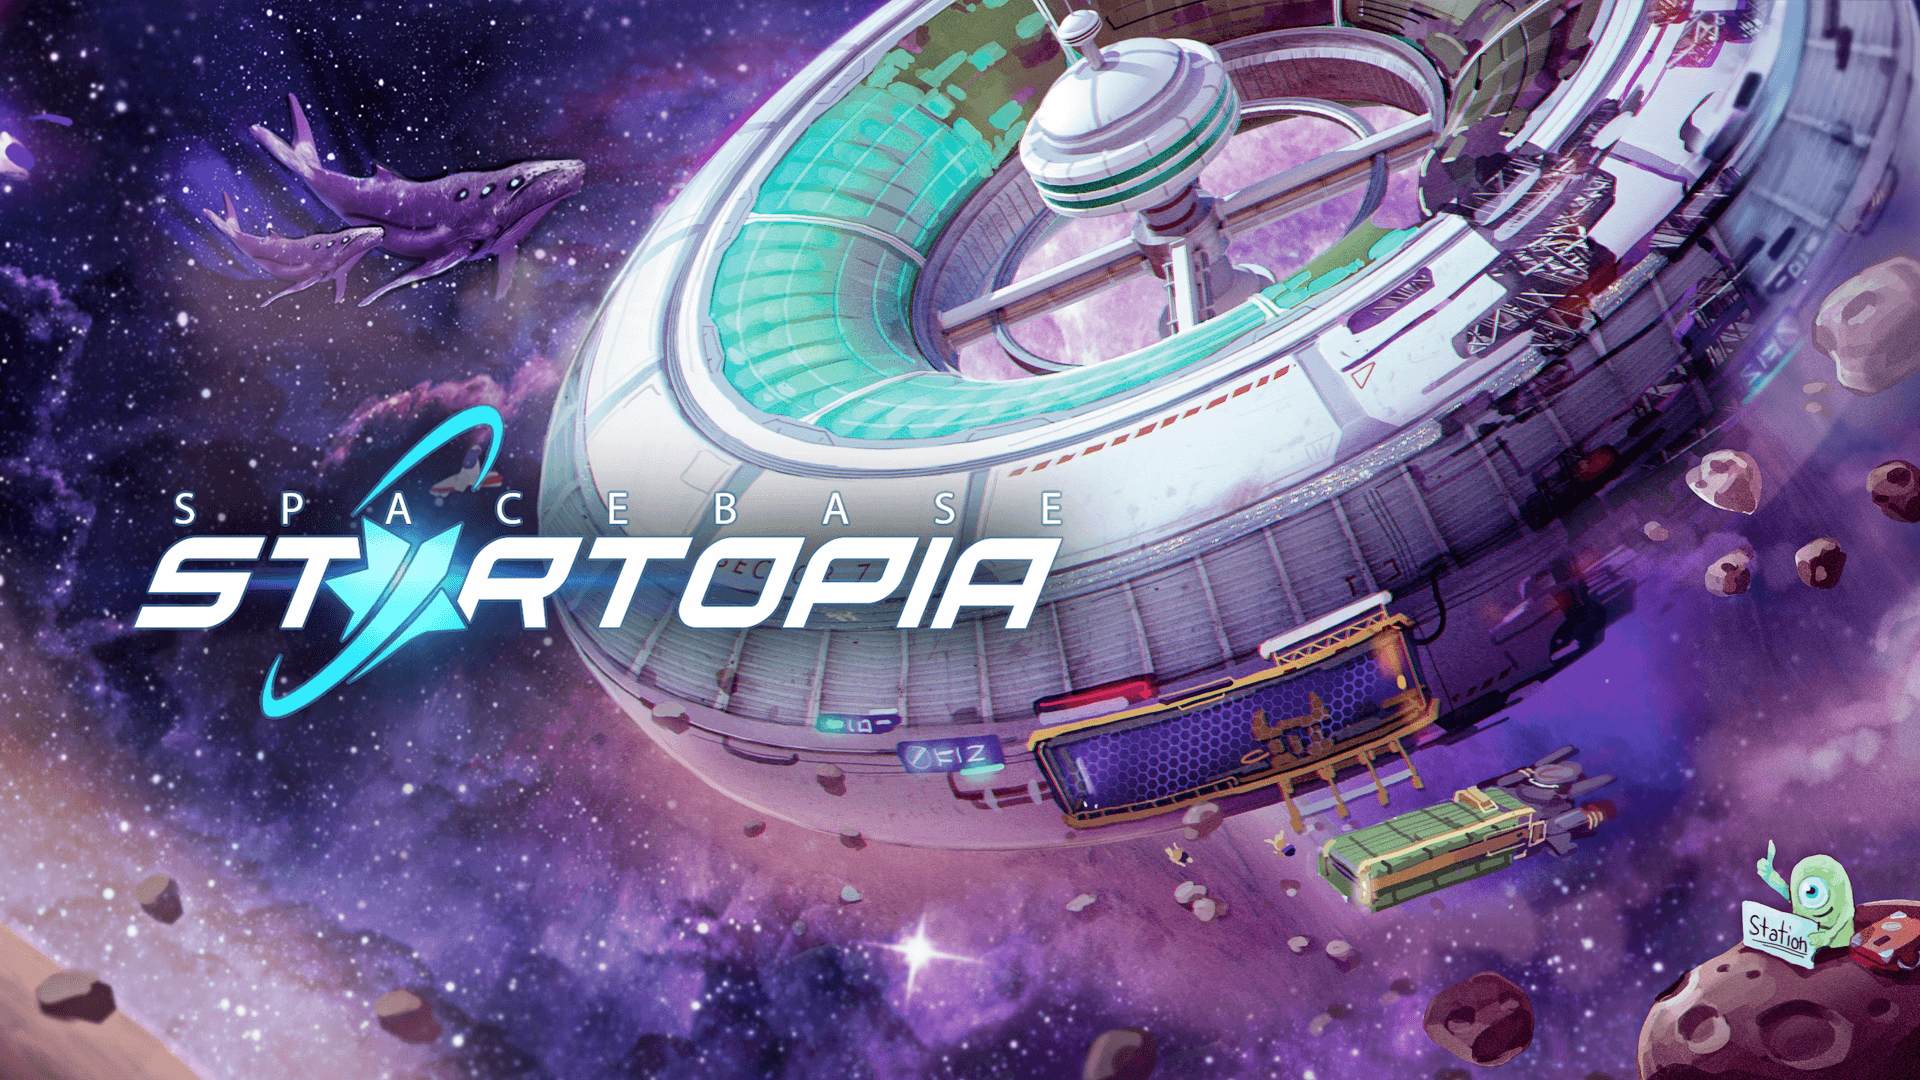 Spacebase Startopia Review: E.T.'s Day Off